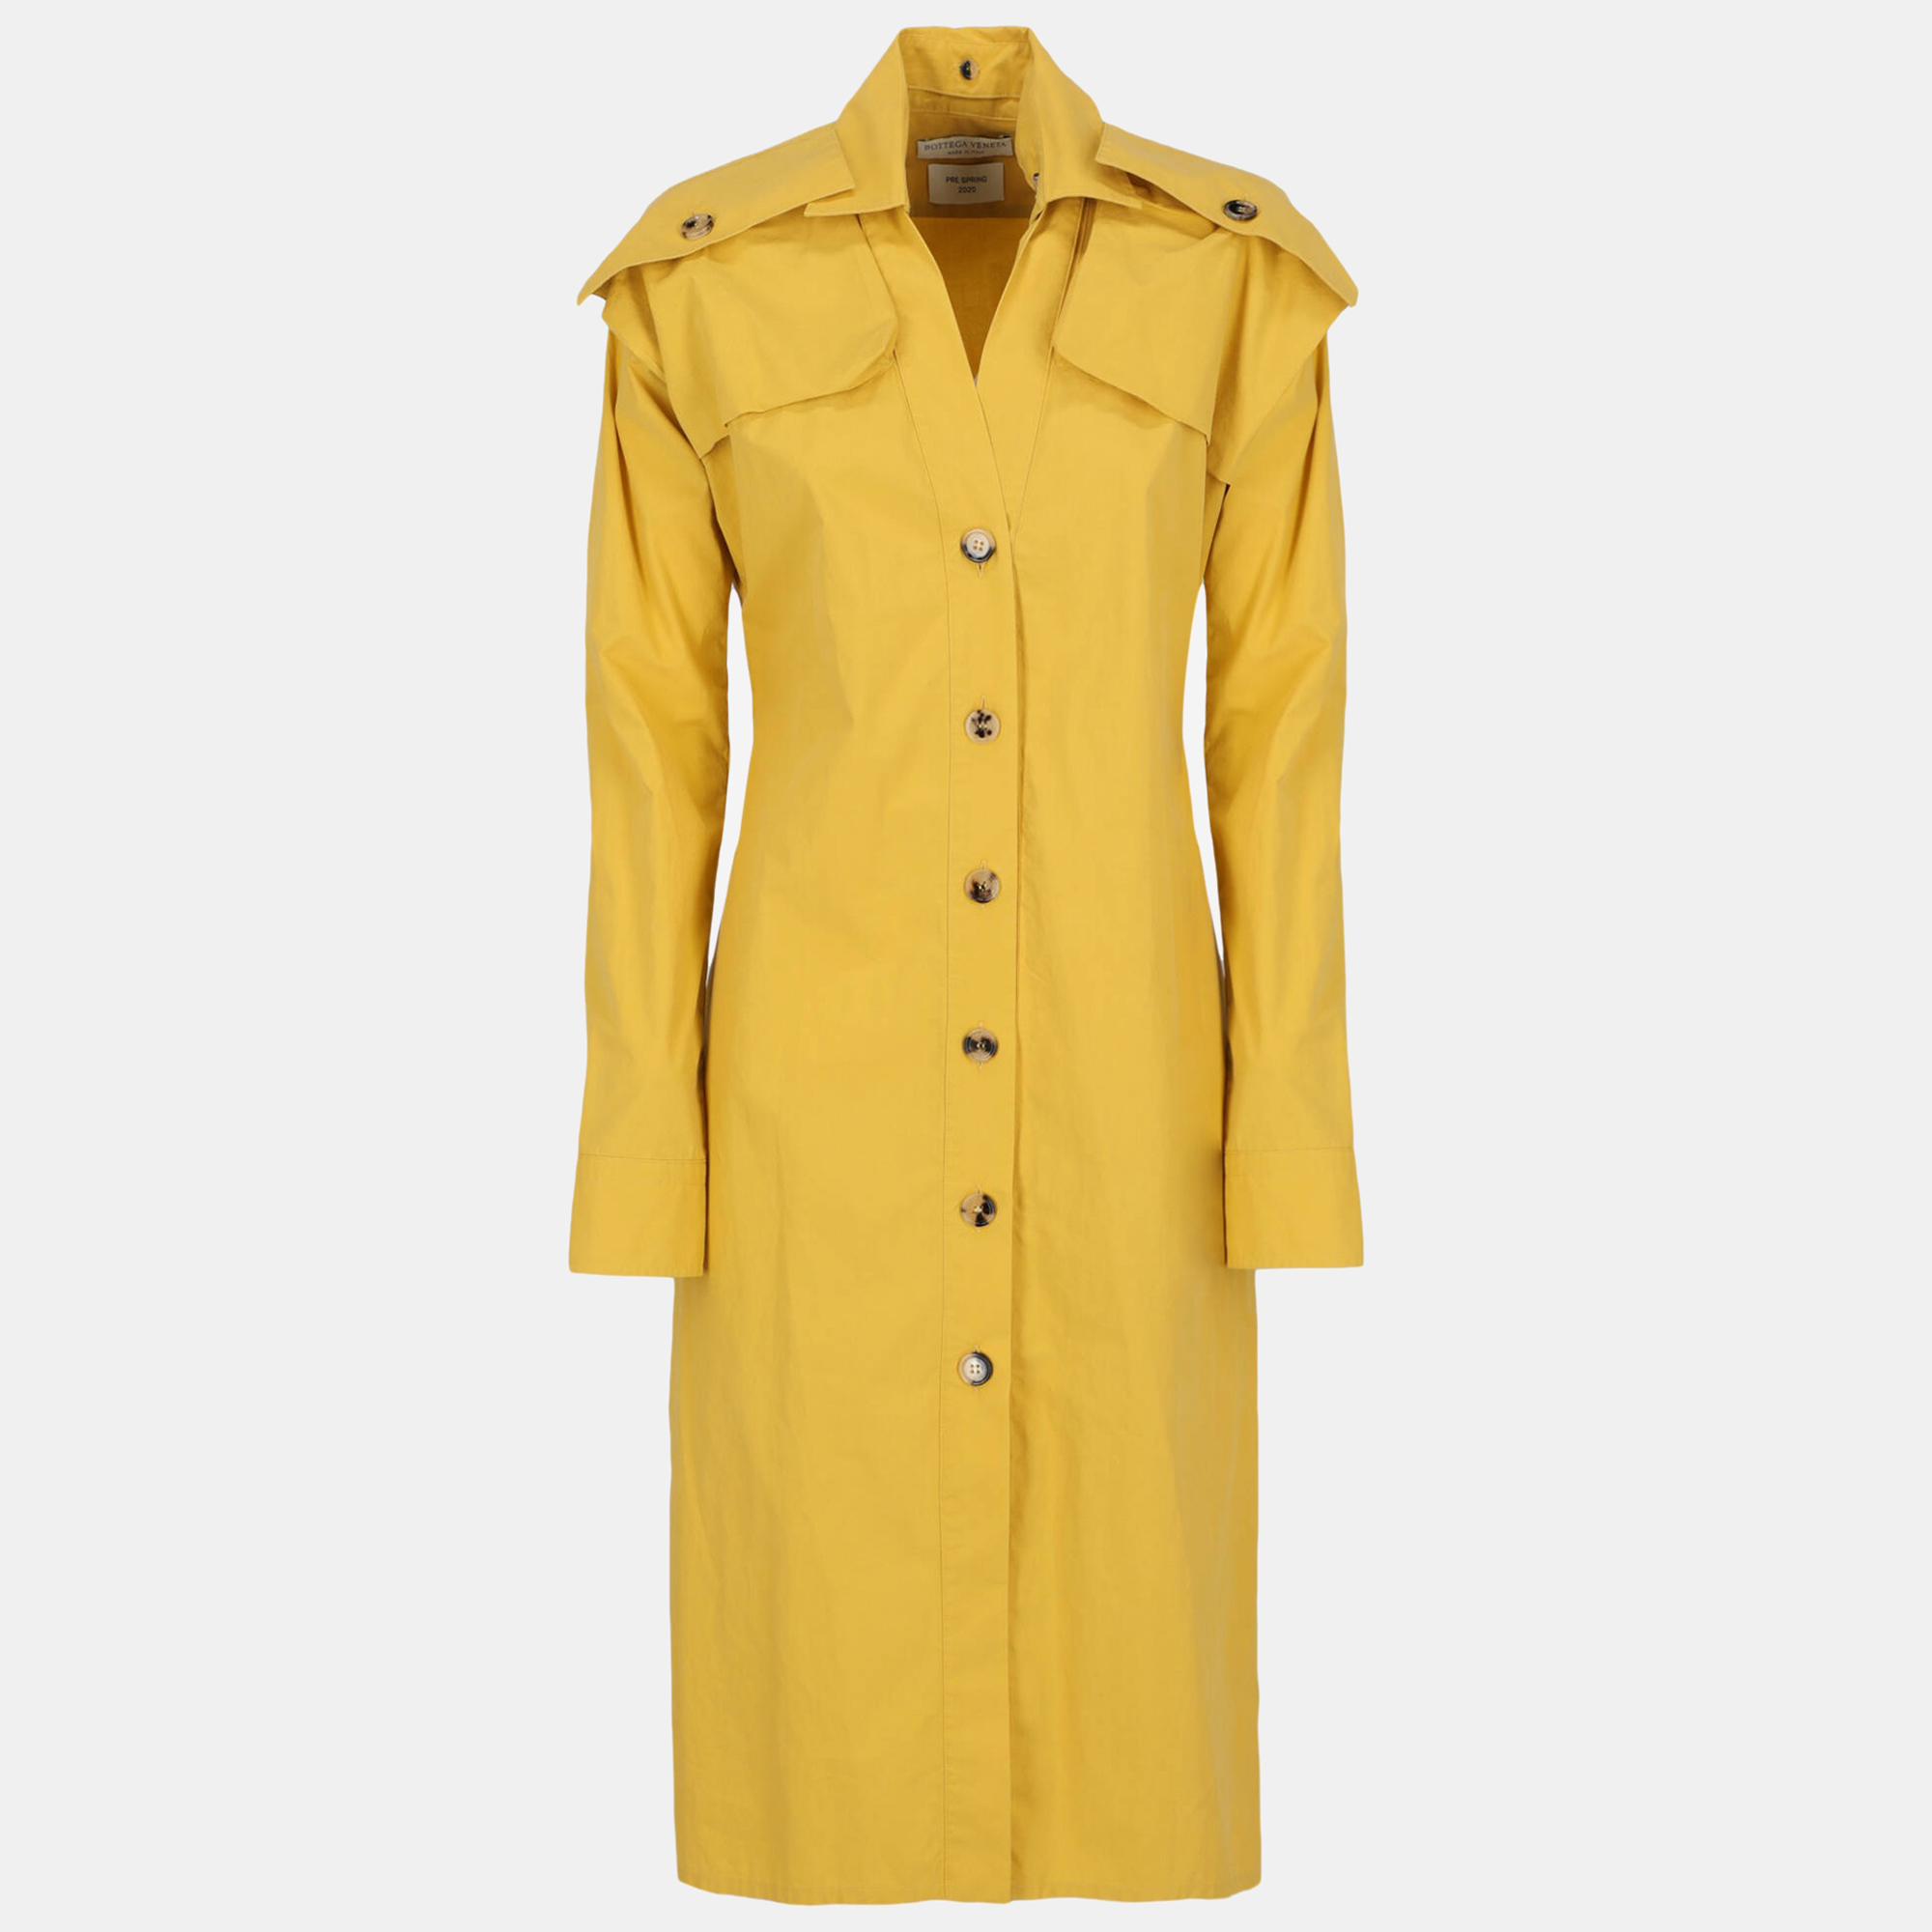 Bottega Veneta Women's Cotton Longuette Dress - Yellow - S